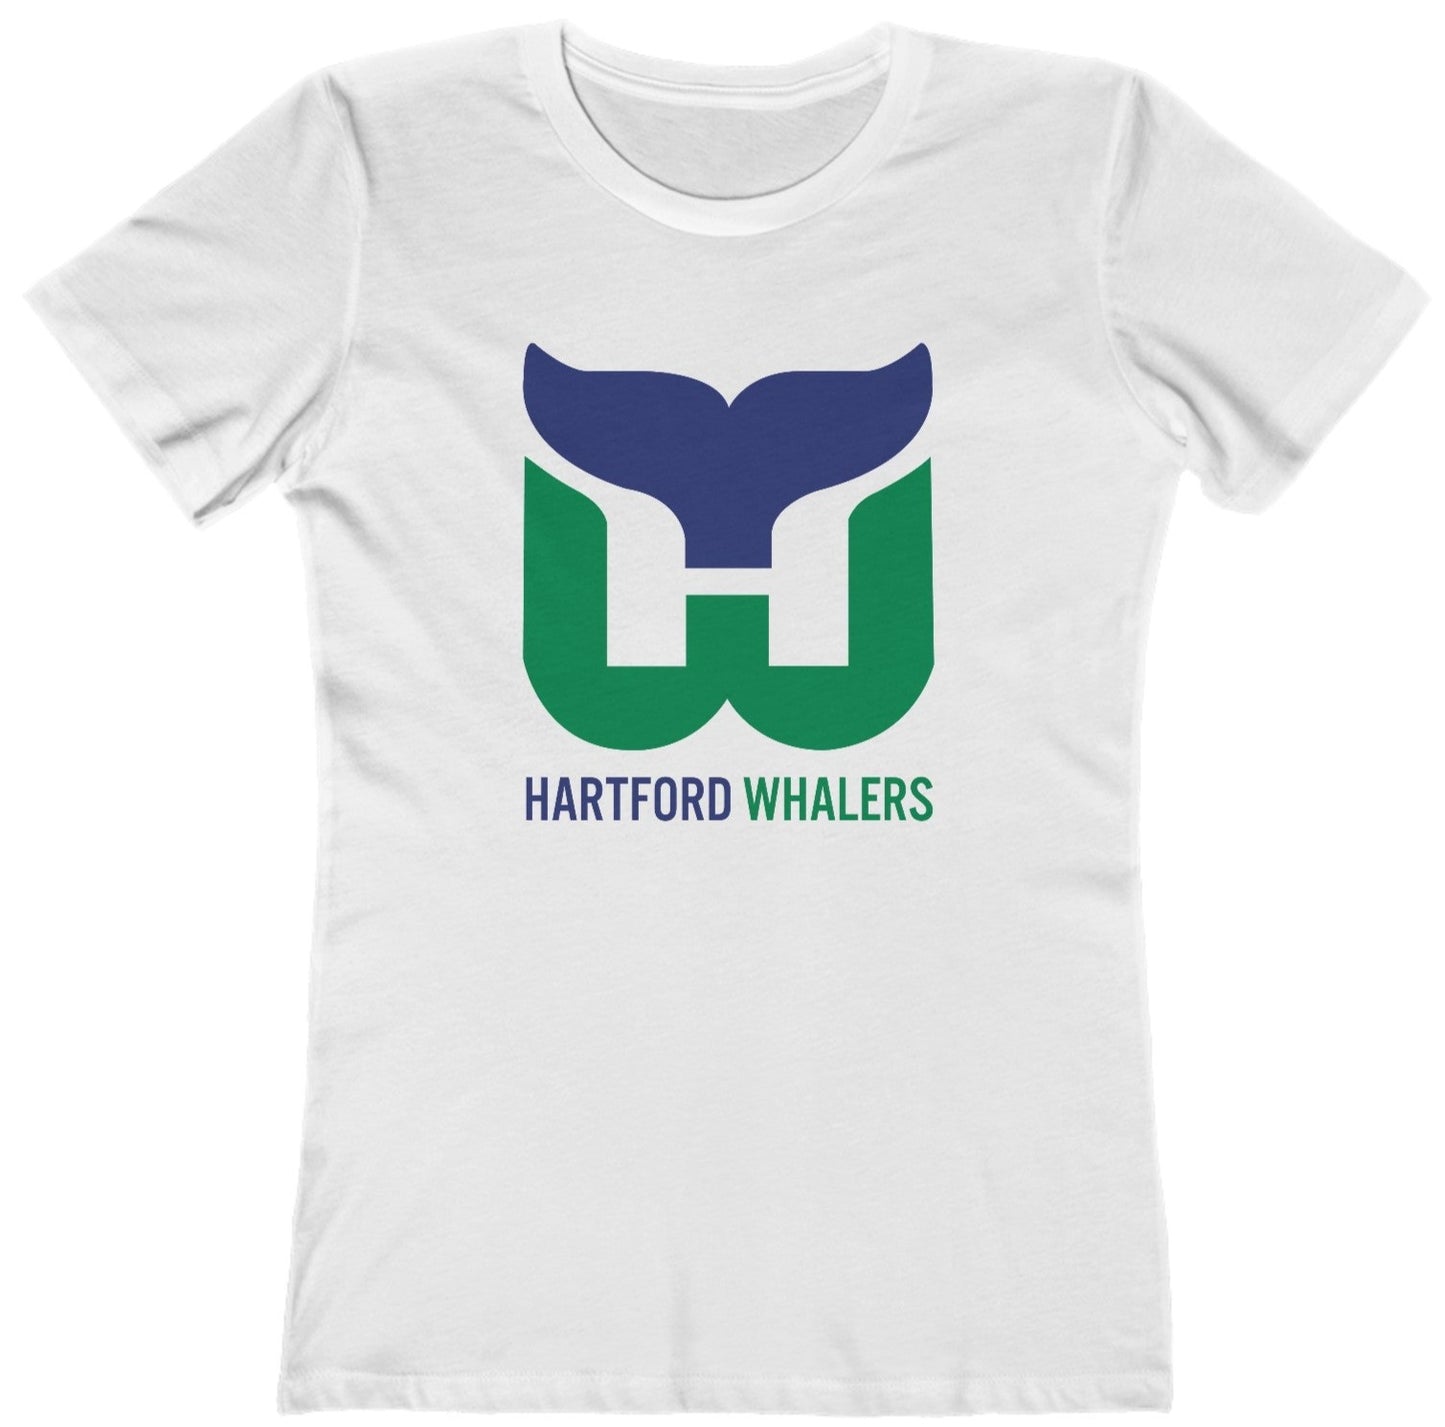 Hartford Whalers - Women's T-Shirt